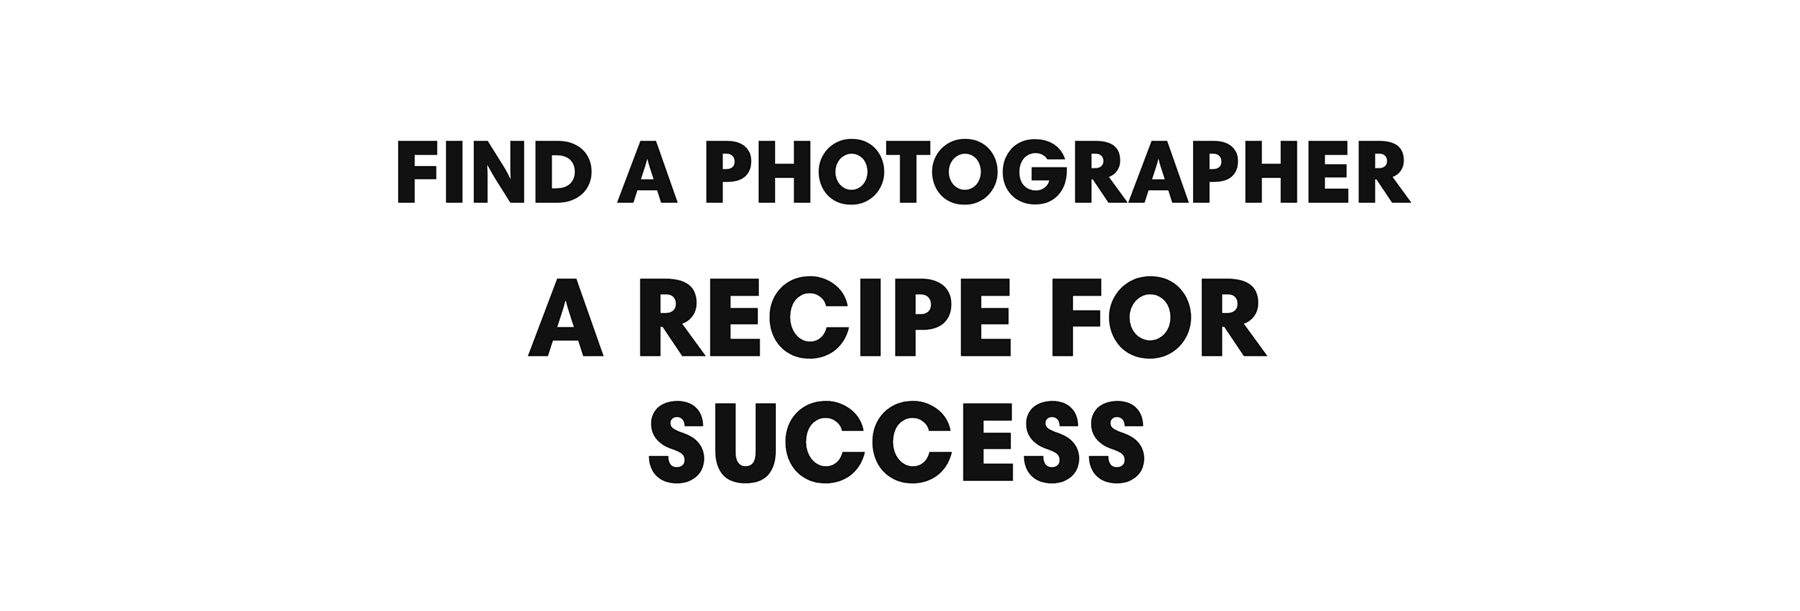 Find a Photographer・Recipe for Success・Manja Wachsmuth